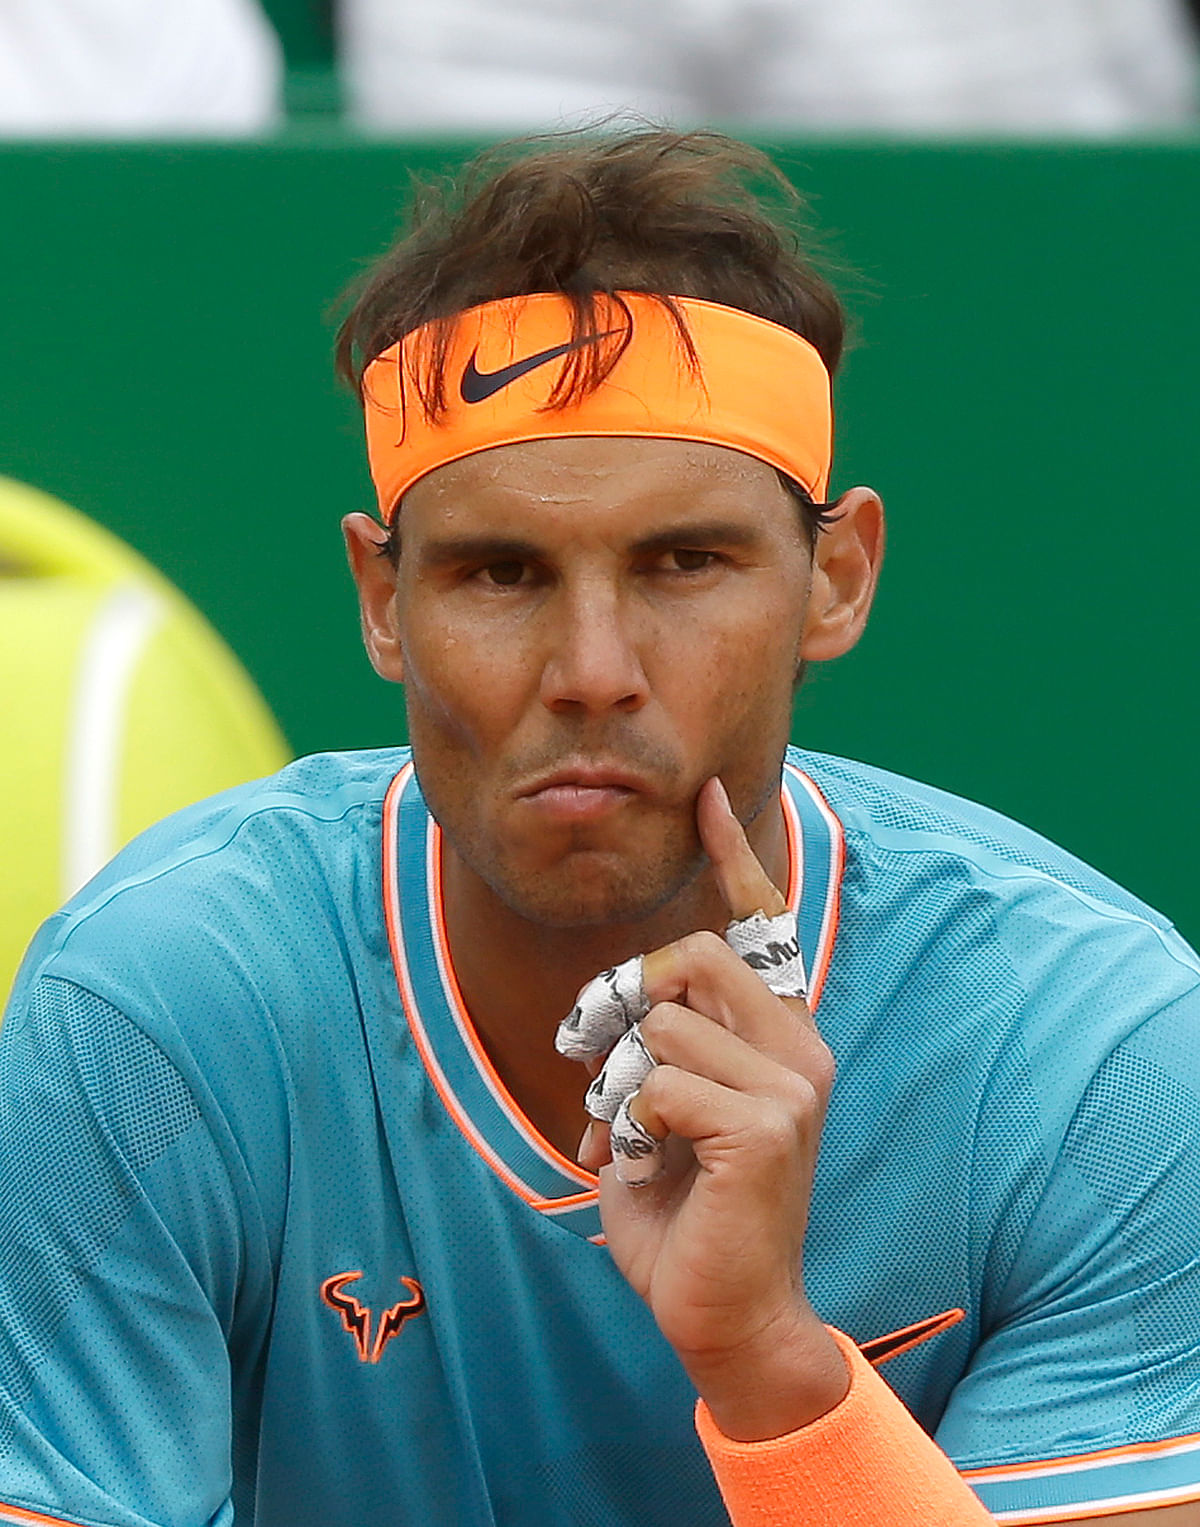 Fabio Fognini beat defending champion Rafael Nadal  6-4, 6-2 to enter the Monte Carlo Masters’ final.